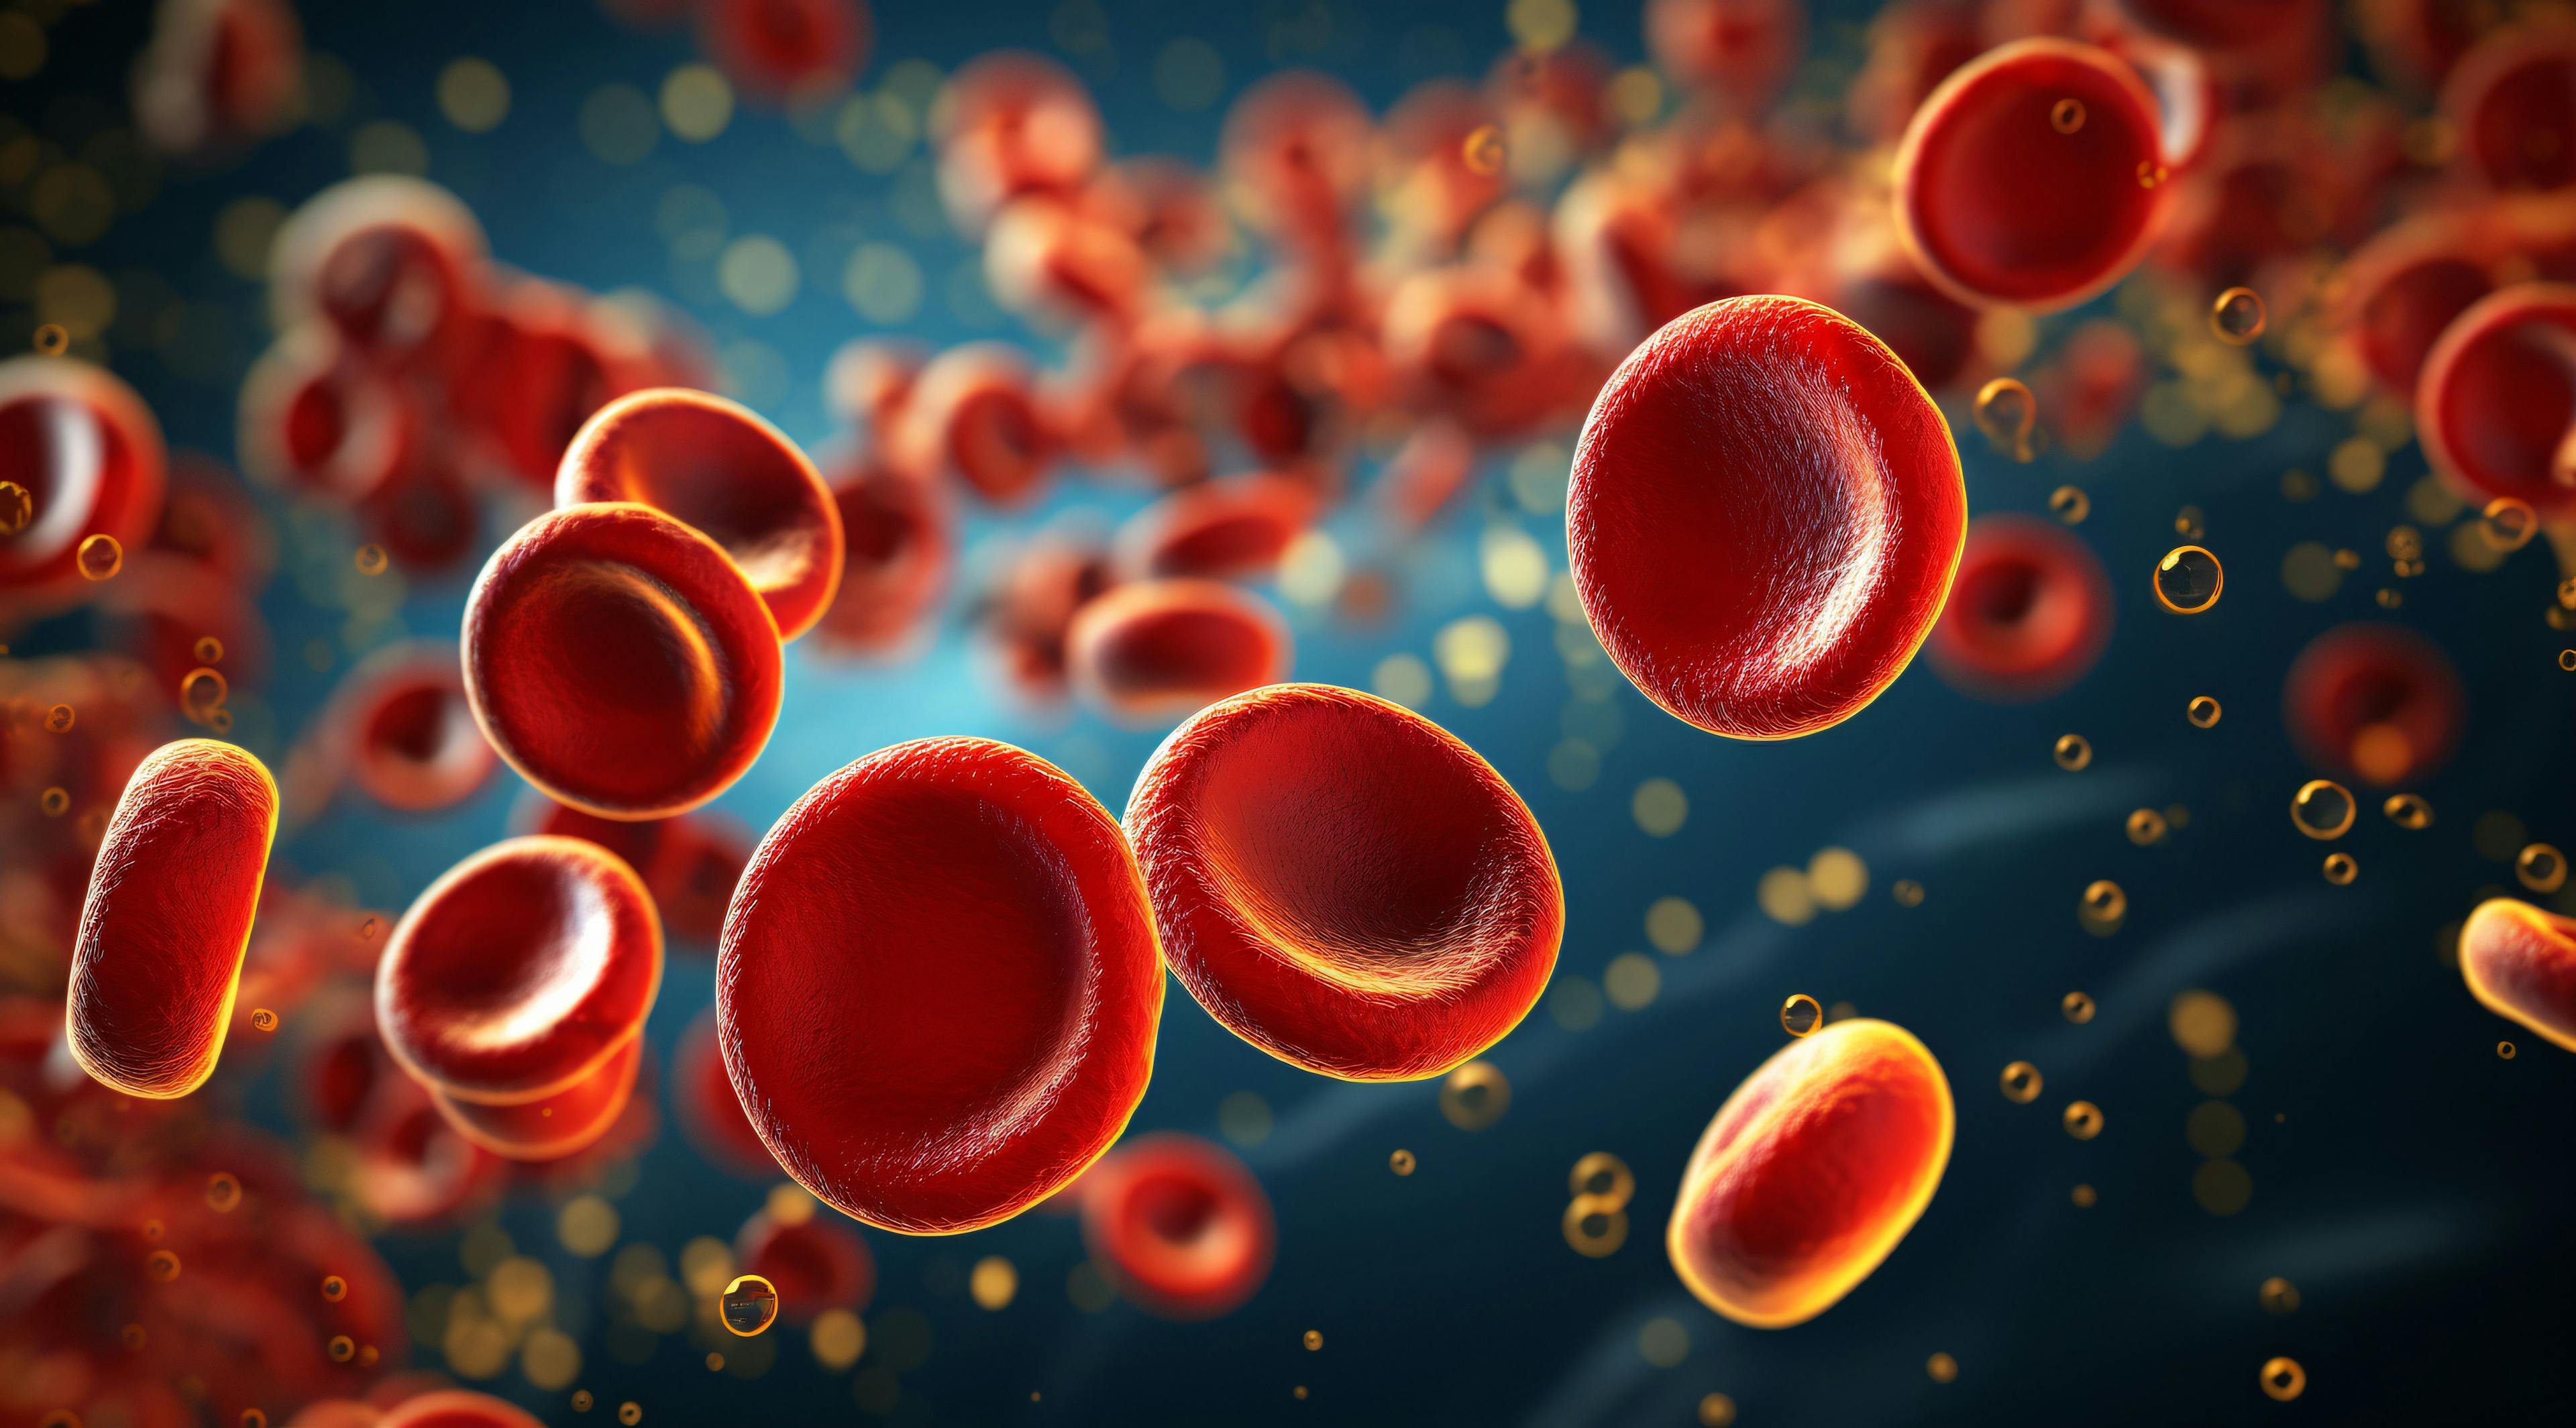 3D rendering of red blood cells: © Kodjovi - stock.adobe.com